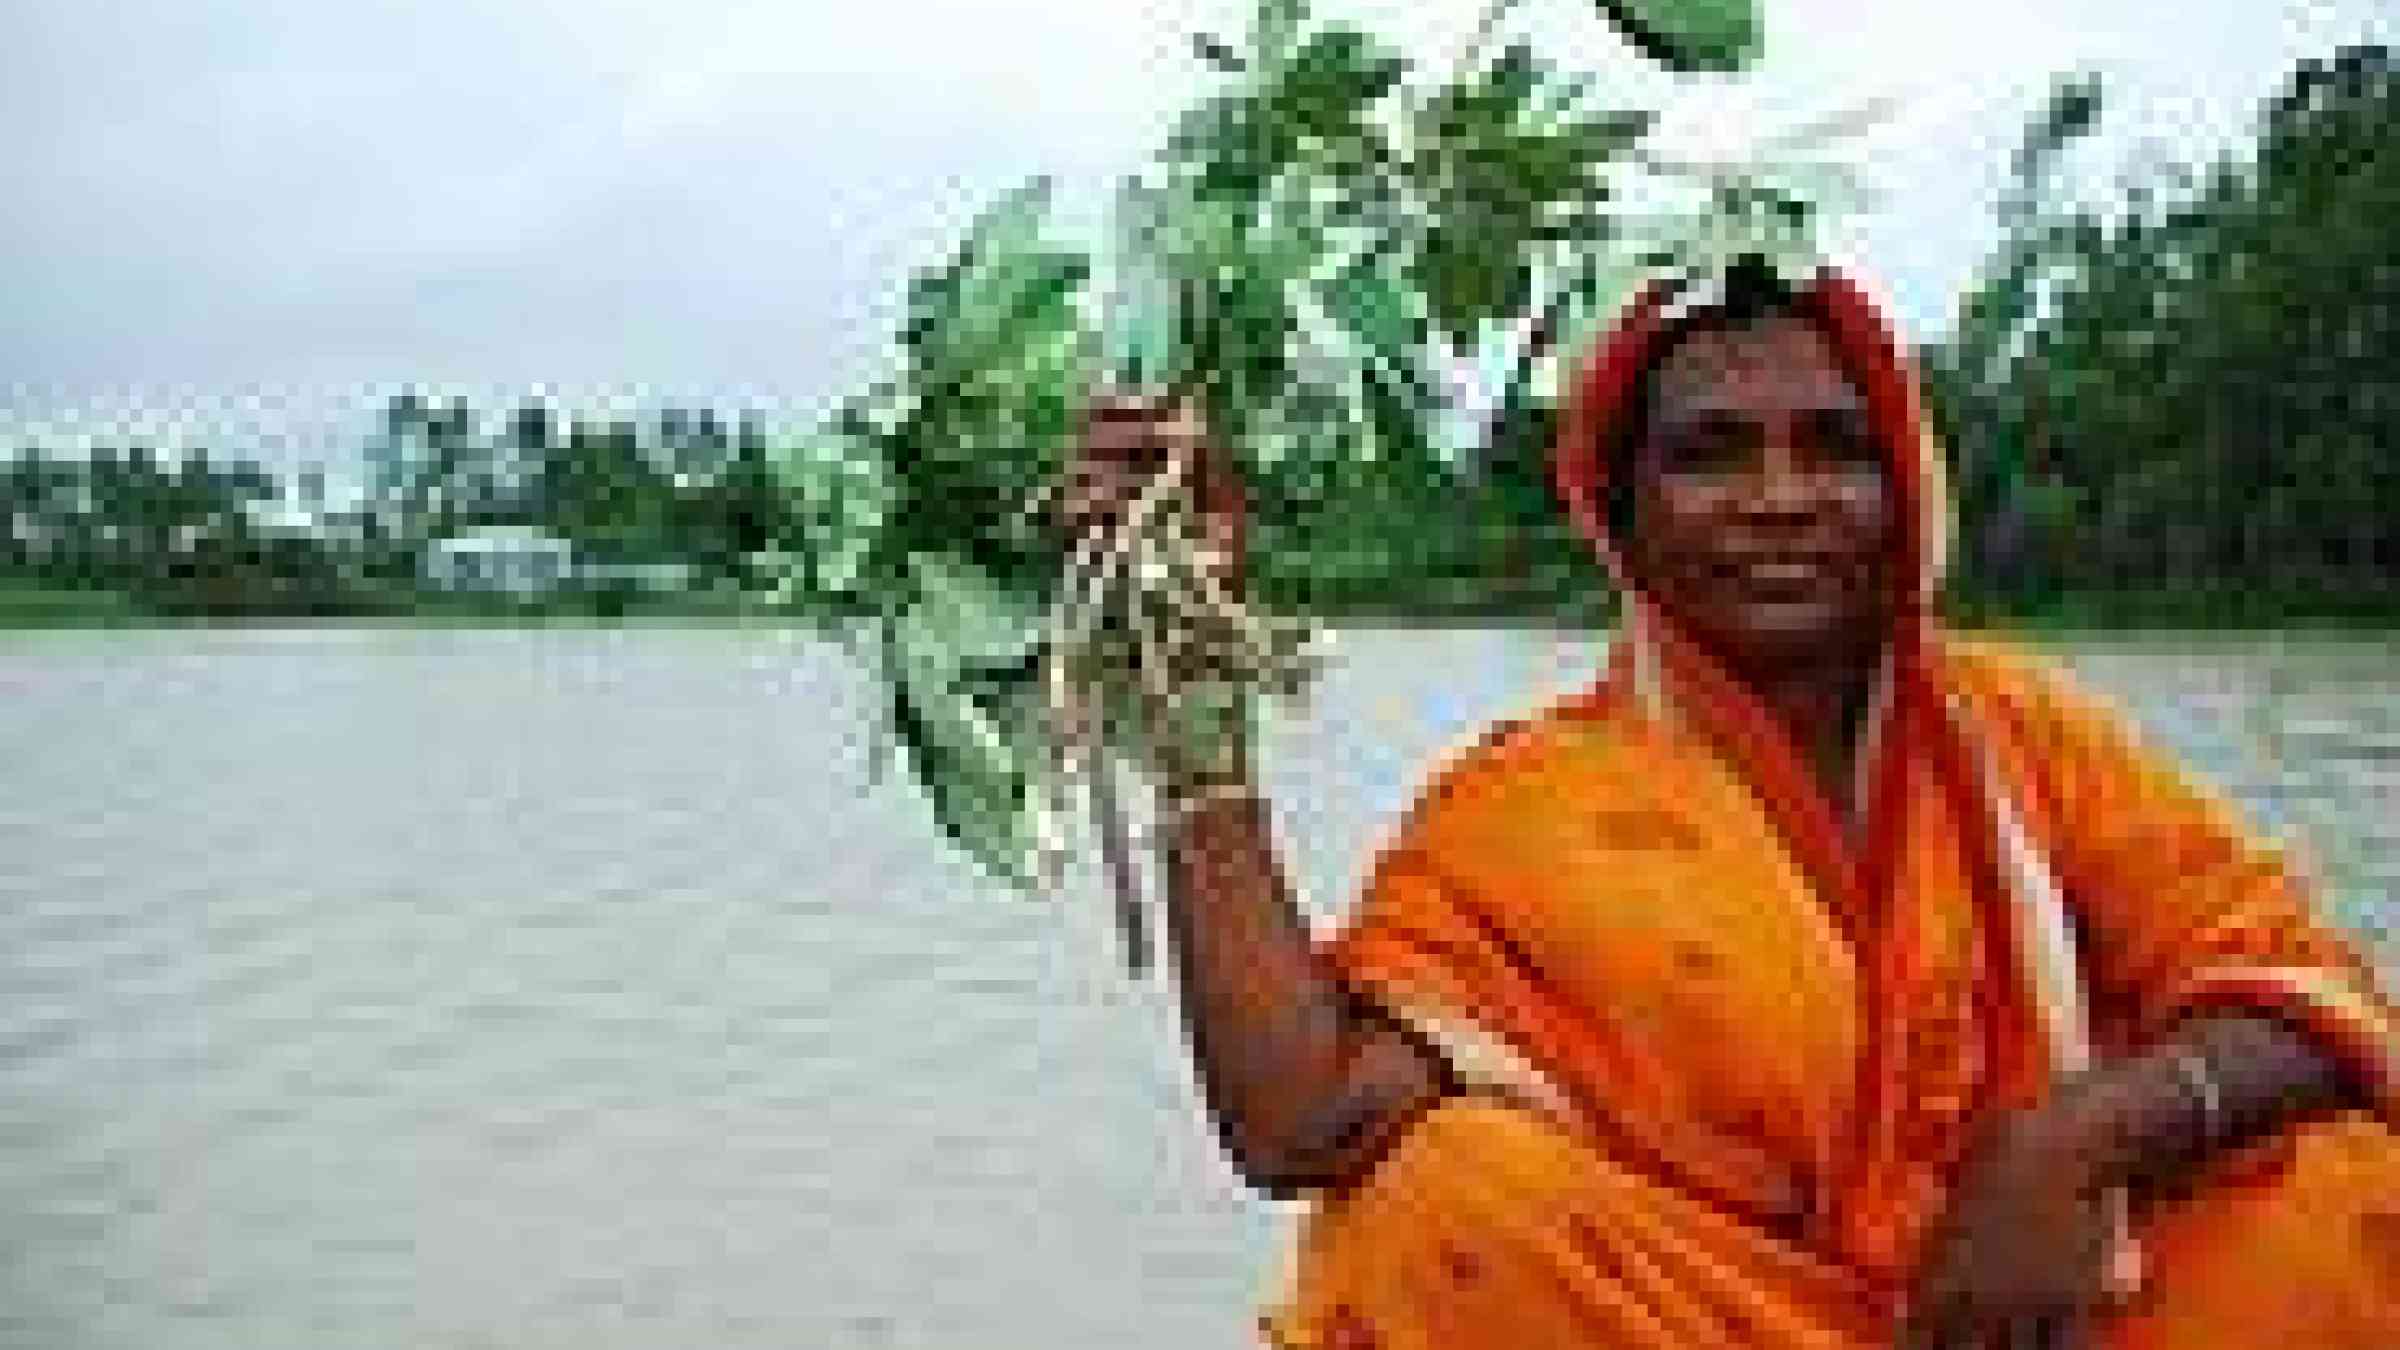 Bangladeshi woman speaks of regular flooding, photo byflickr user amirjina, CC BY-NC-ND 2.0 http://www.flickr.com/photos/amirjina/3747902139/sizes/l/in/photostream/